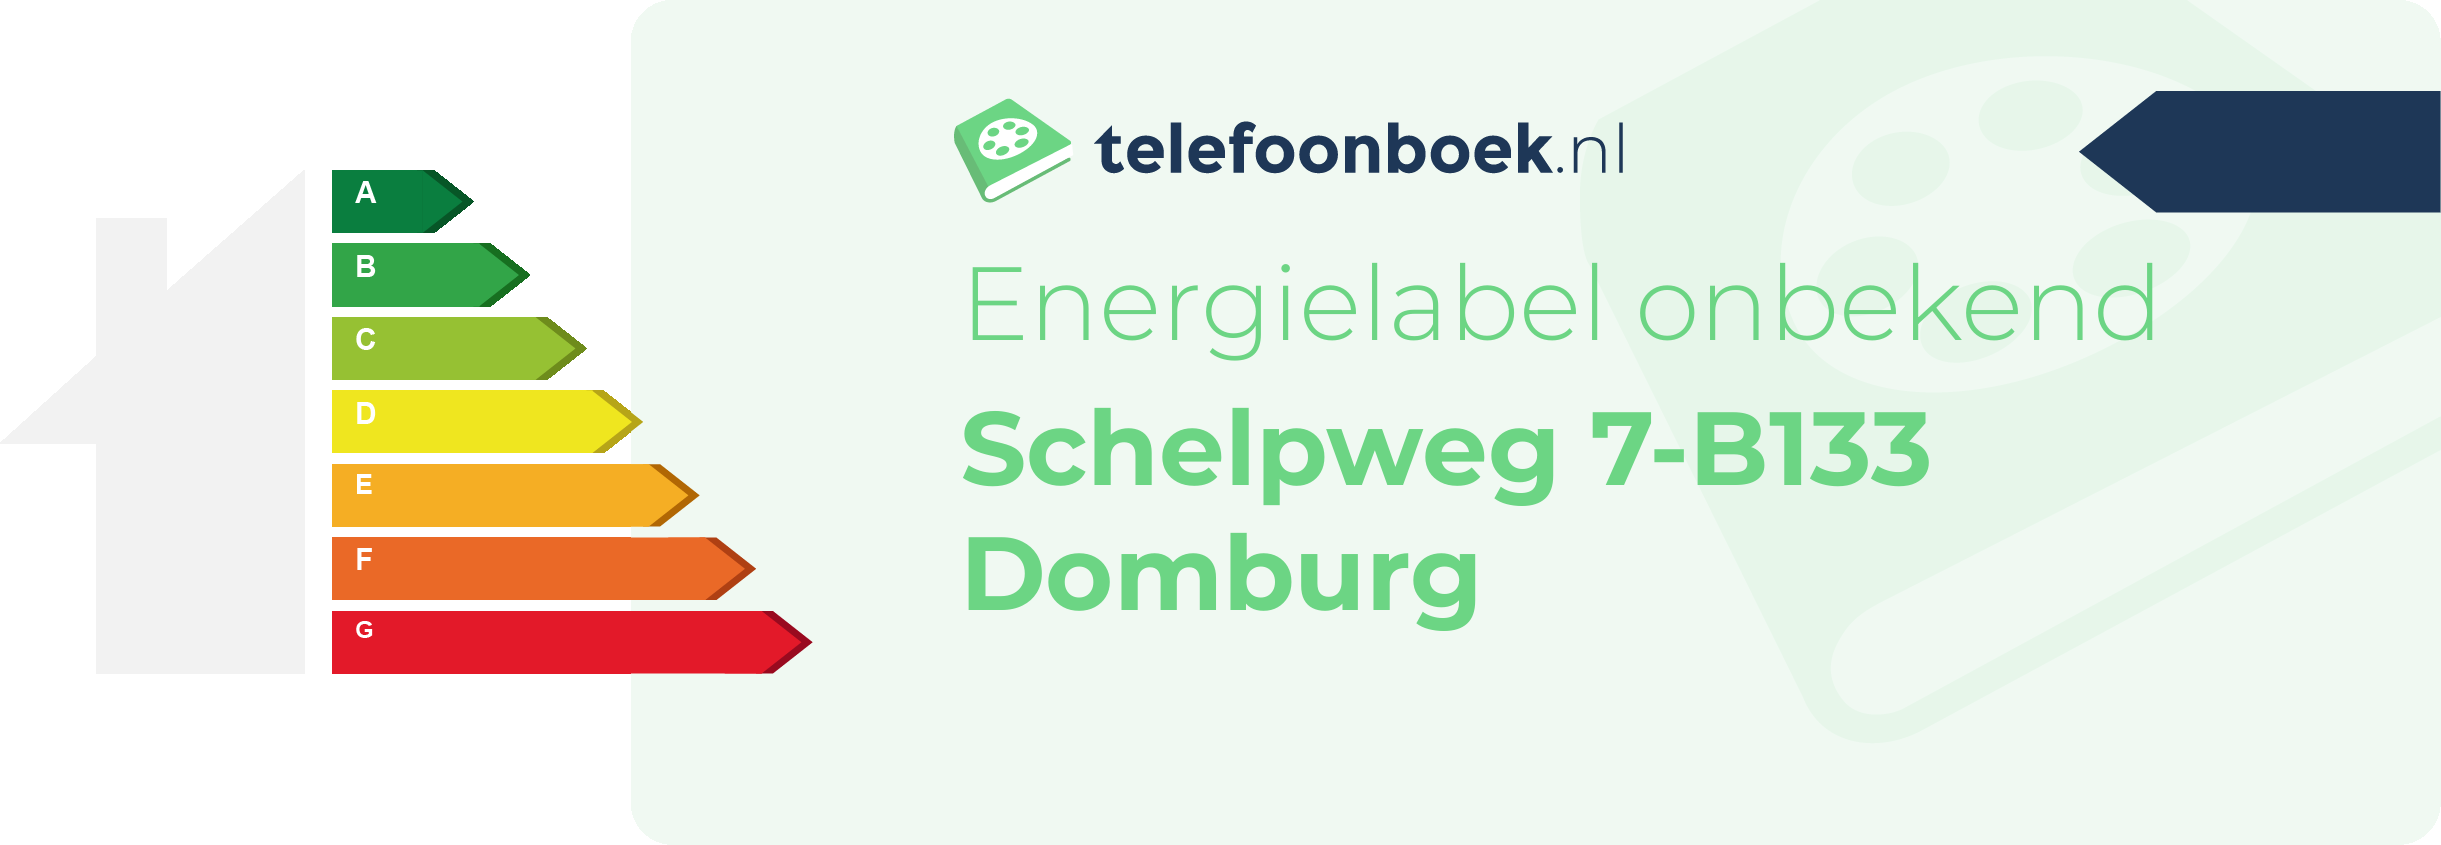 Energielabel Schelpweg 7-B133 Domburg